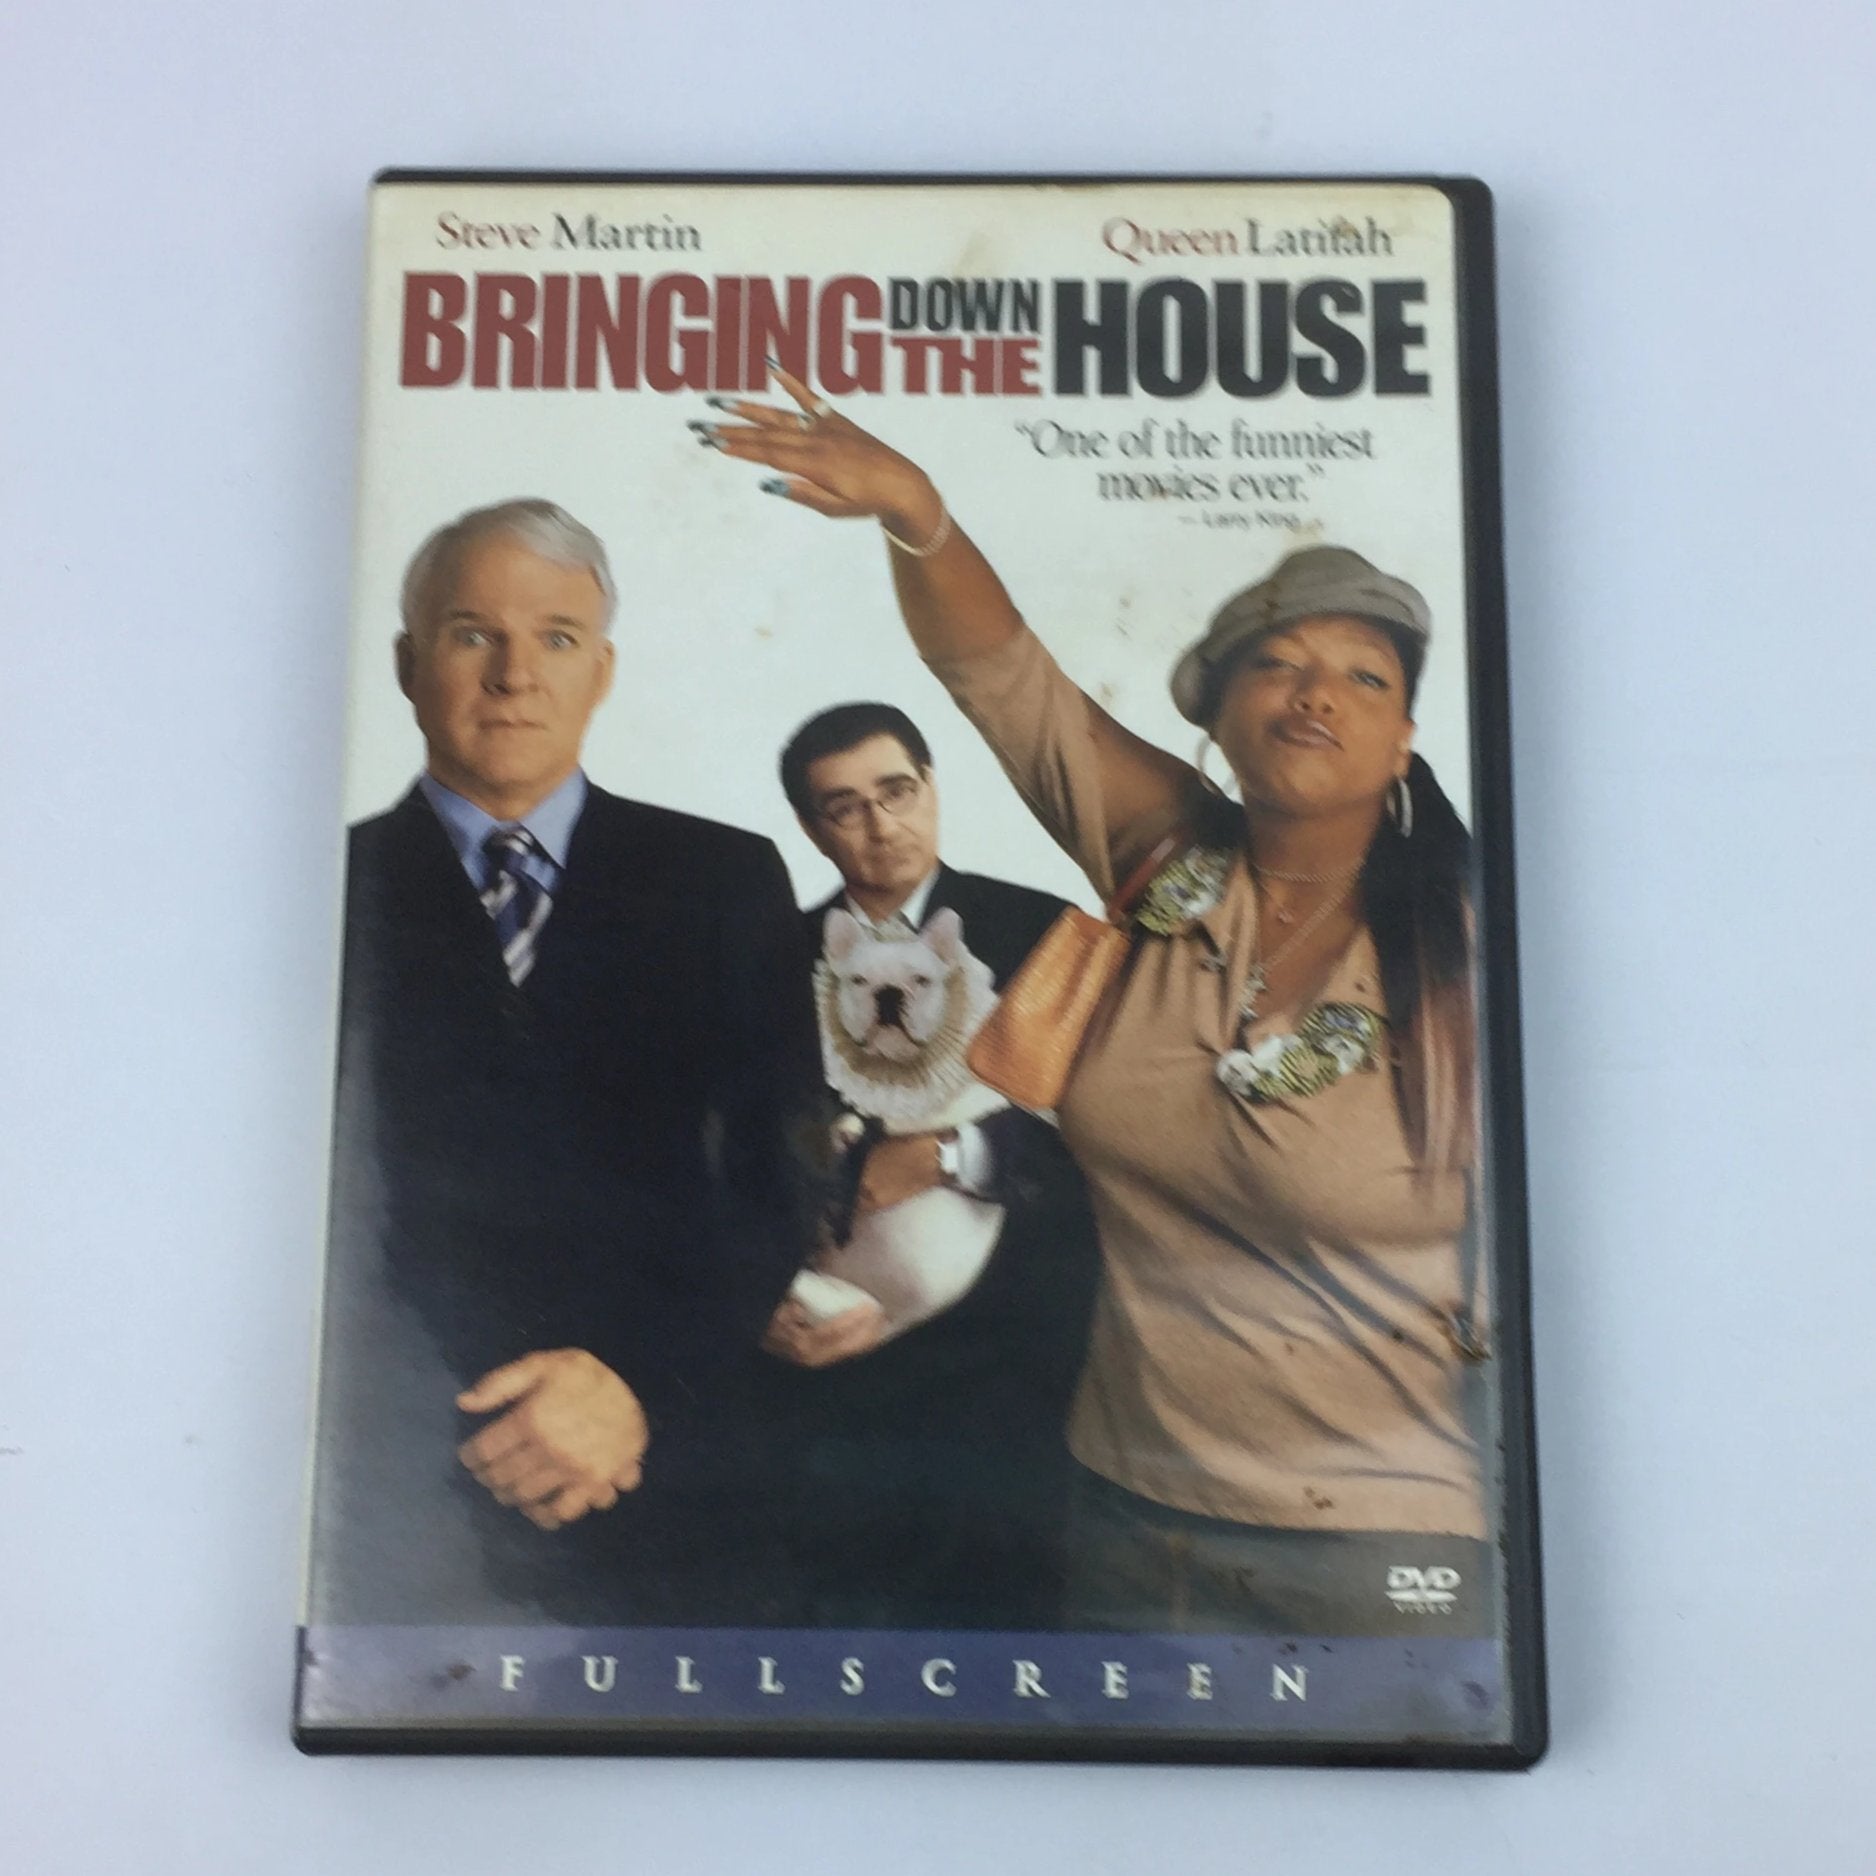 Bringing Down The House (DVD, 2003, Full Screen) Steve Martin, Queen Latifah